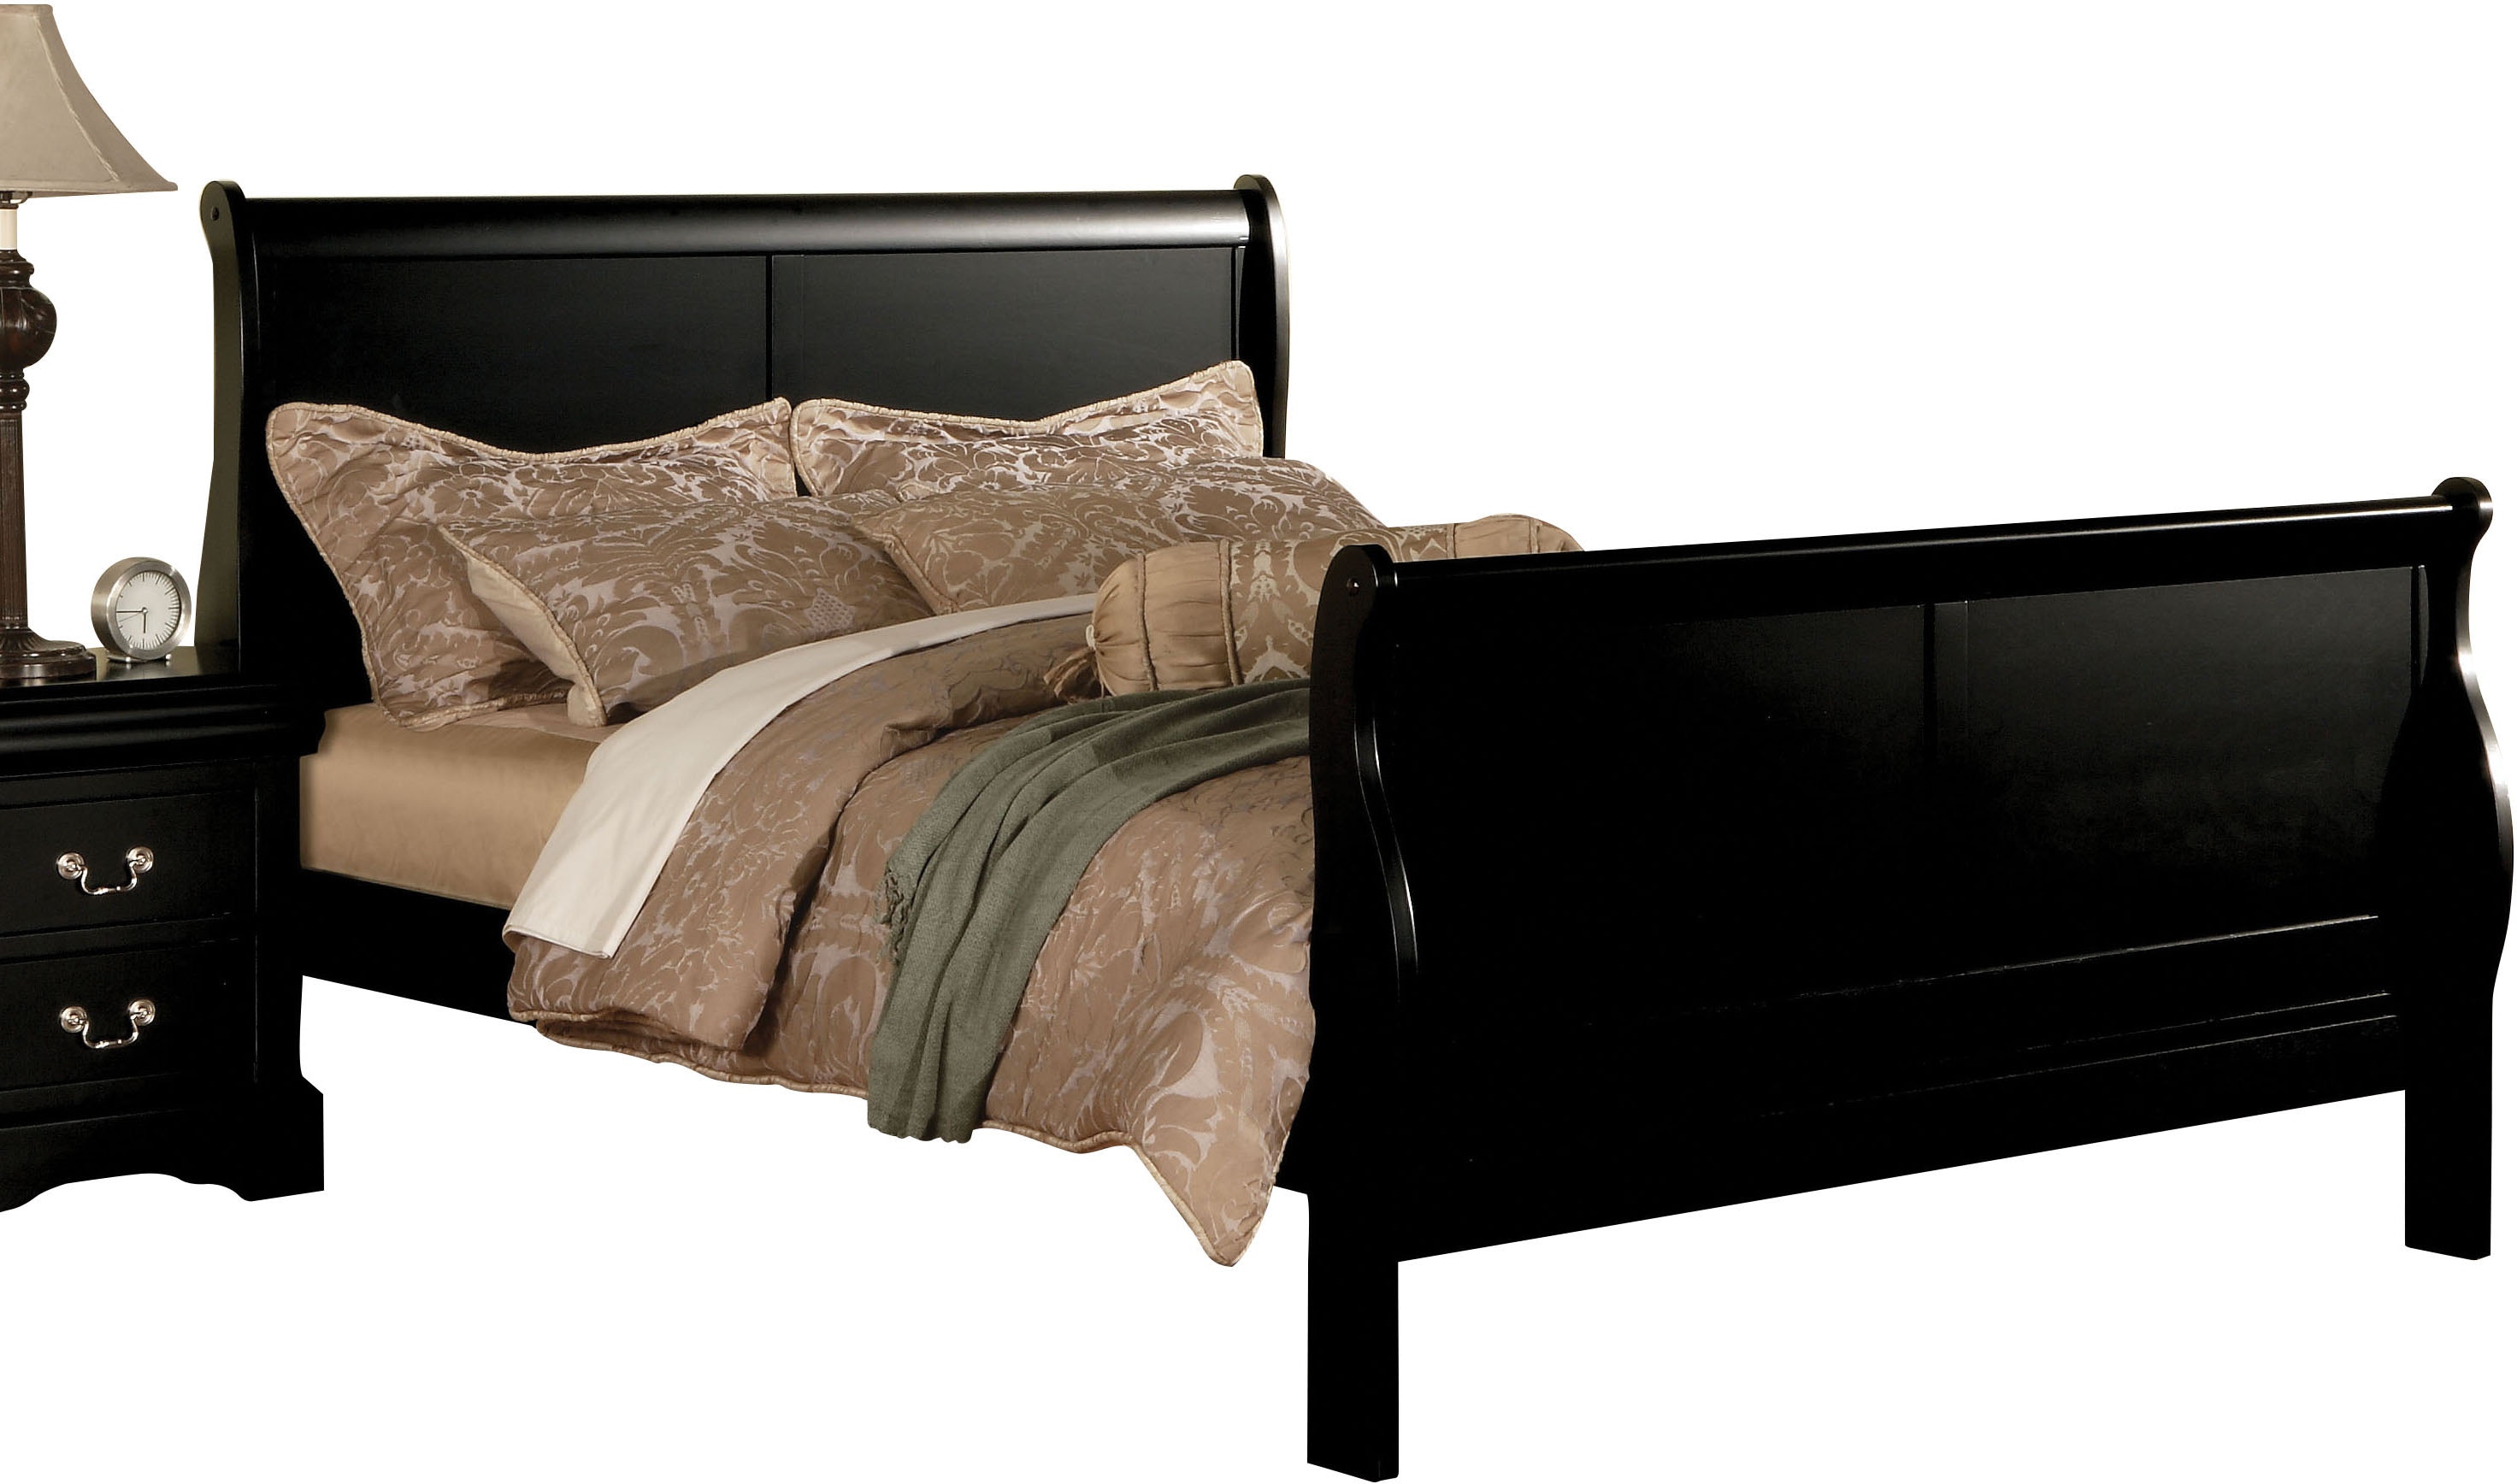 Acme Furniture Louis Philippe III 19500 Q Set Transtional Queen Bedroom  Group, Del Sol Furniture